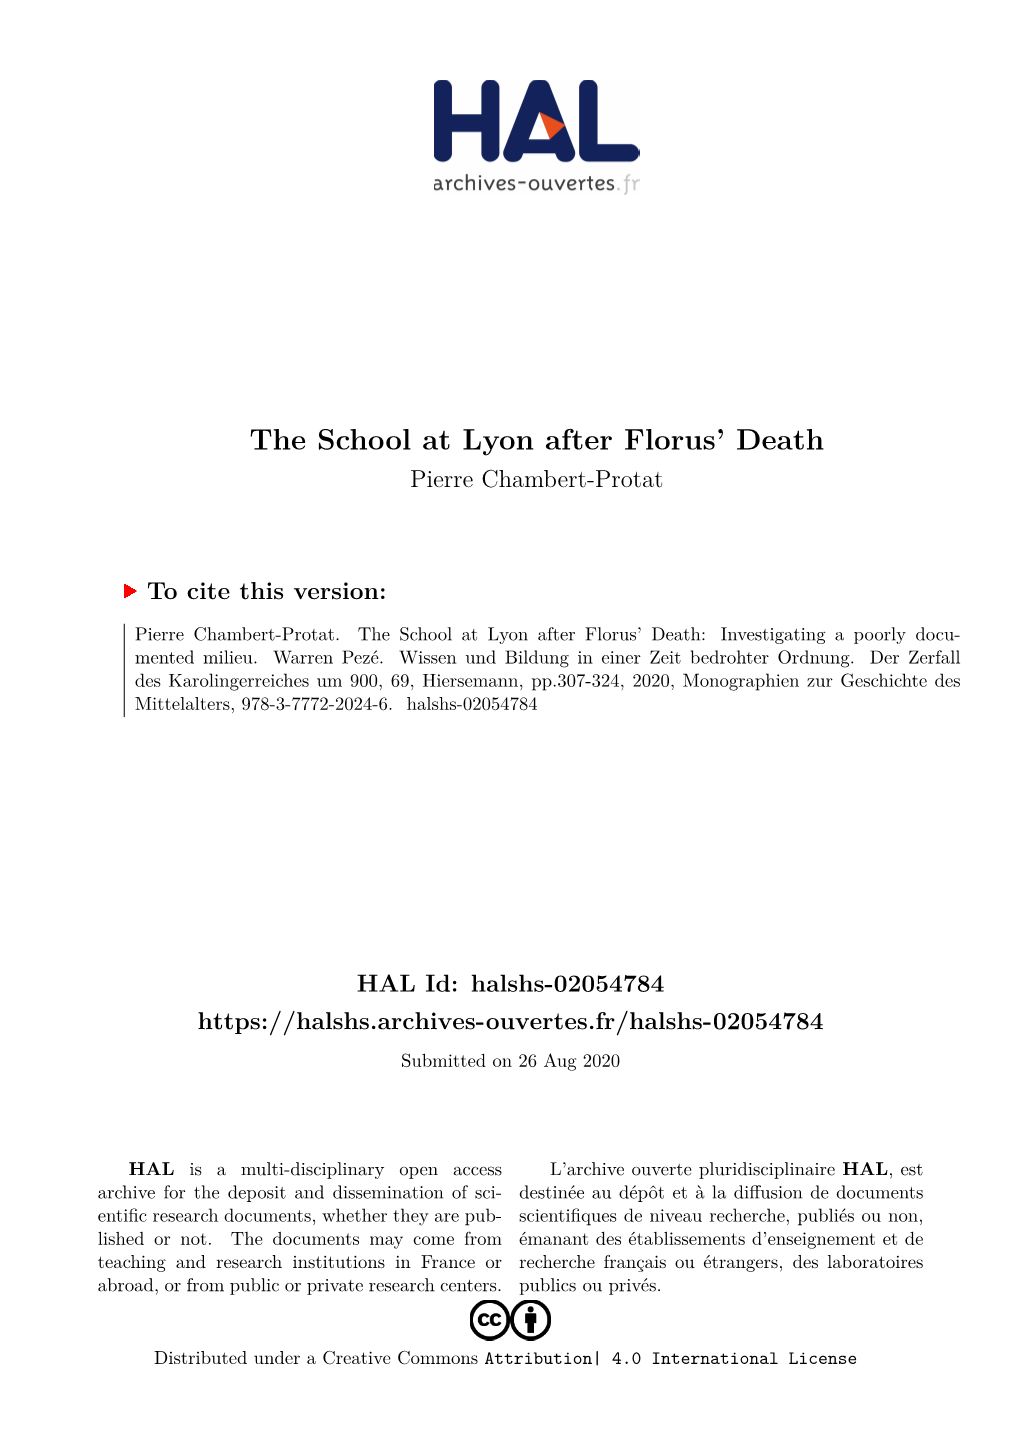 The School at Lyon After Florus' Death